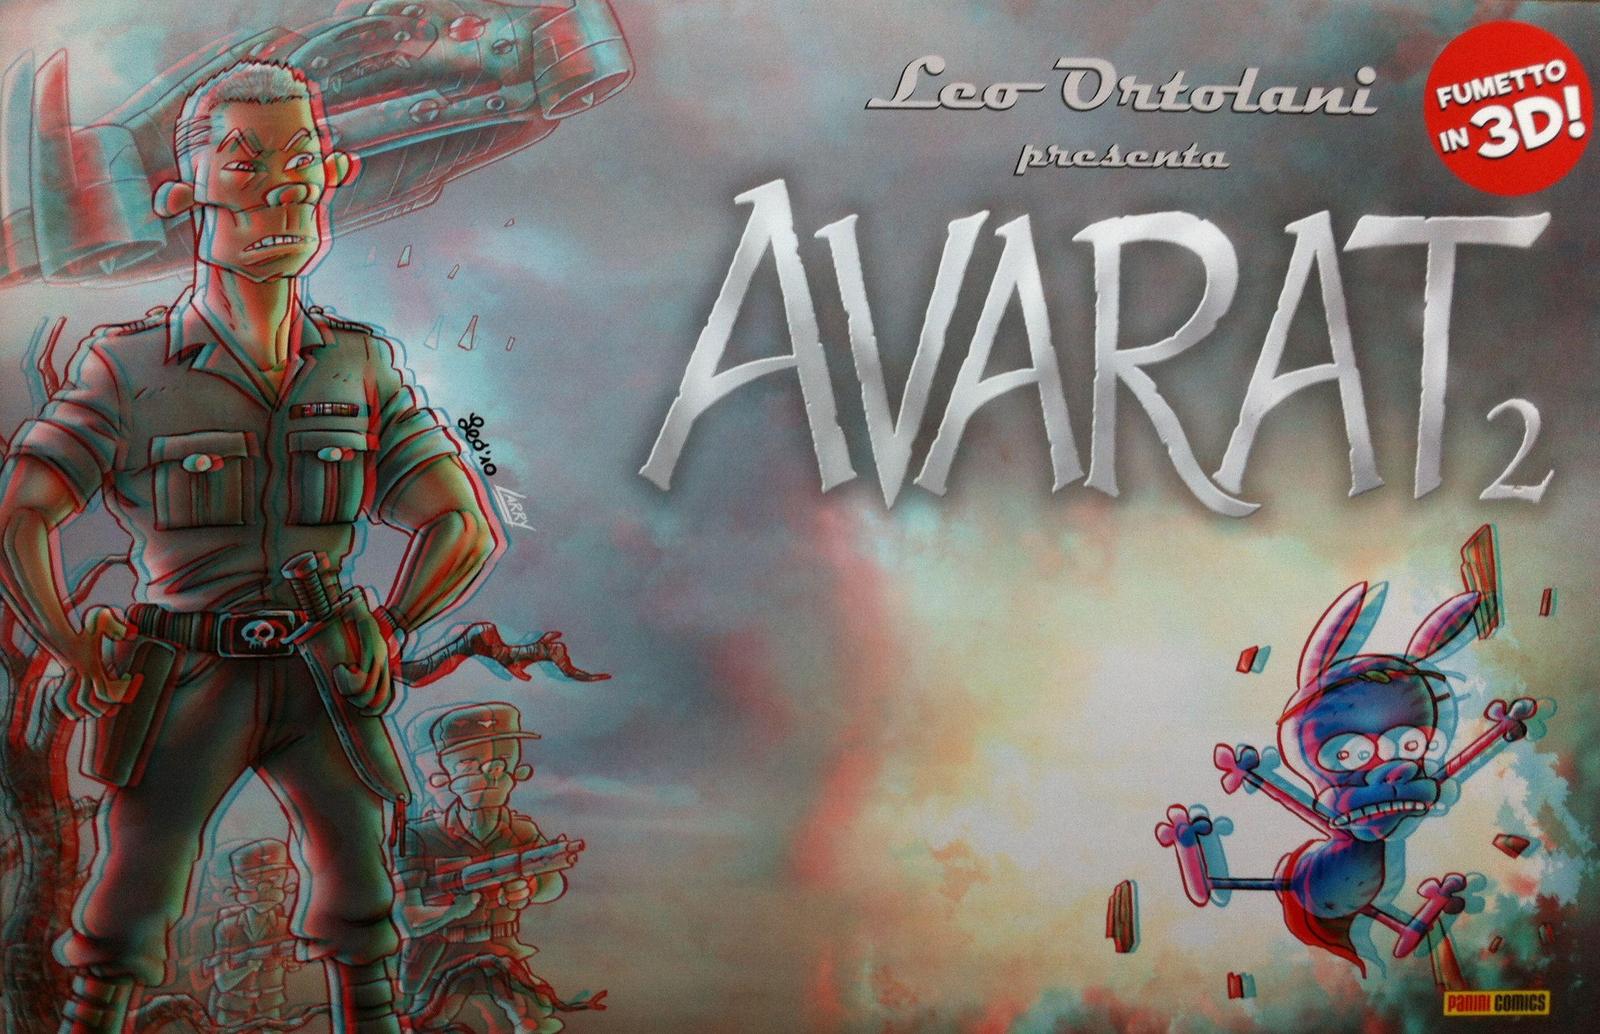 Avarat 2 (Italian language, 2010, Panini Comics)